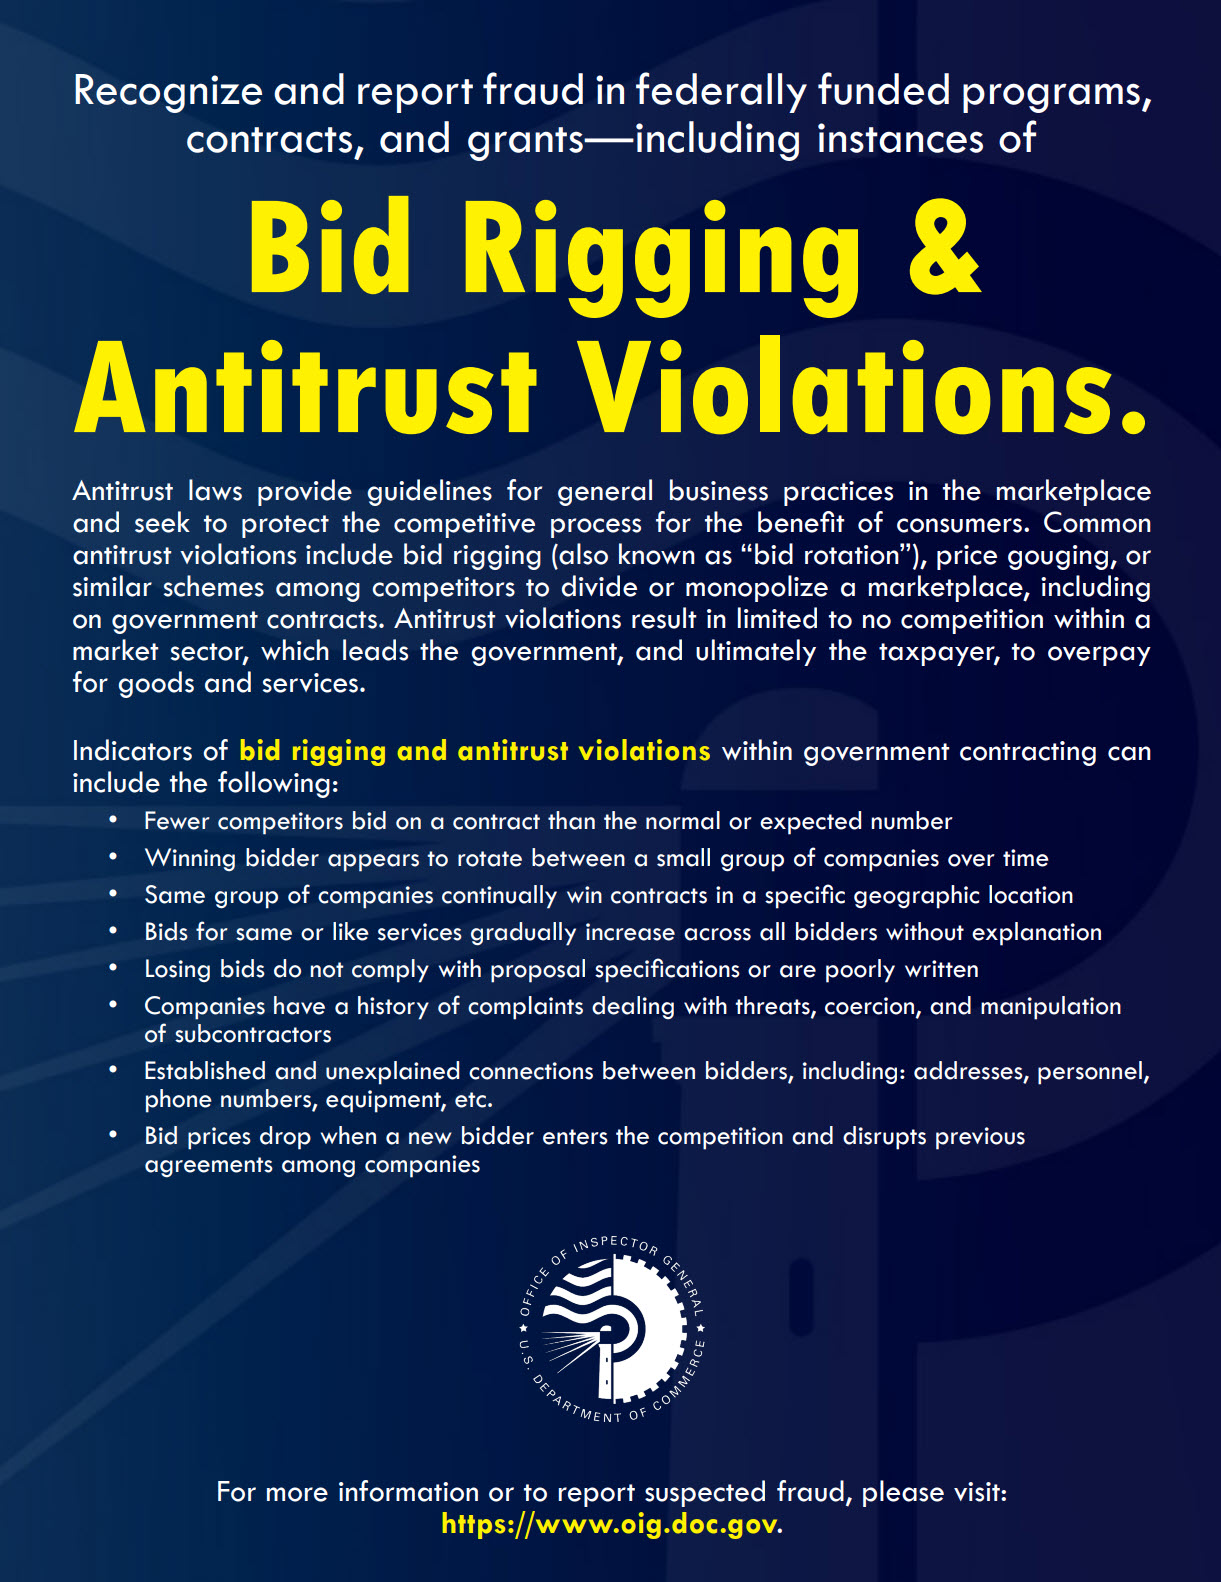 Post1_Bid Rigging and Antitrust Violations_Flyer_2021-11-09.jpg